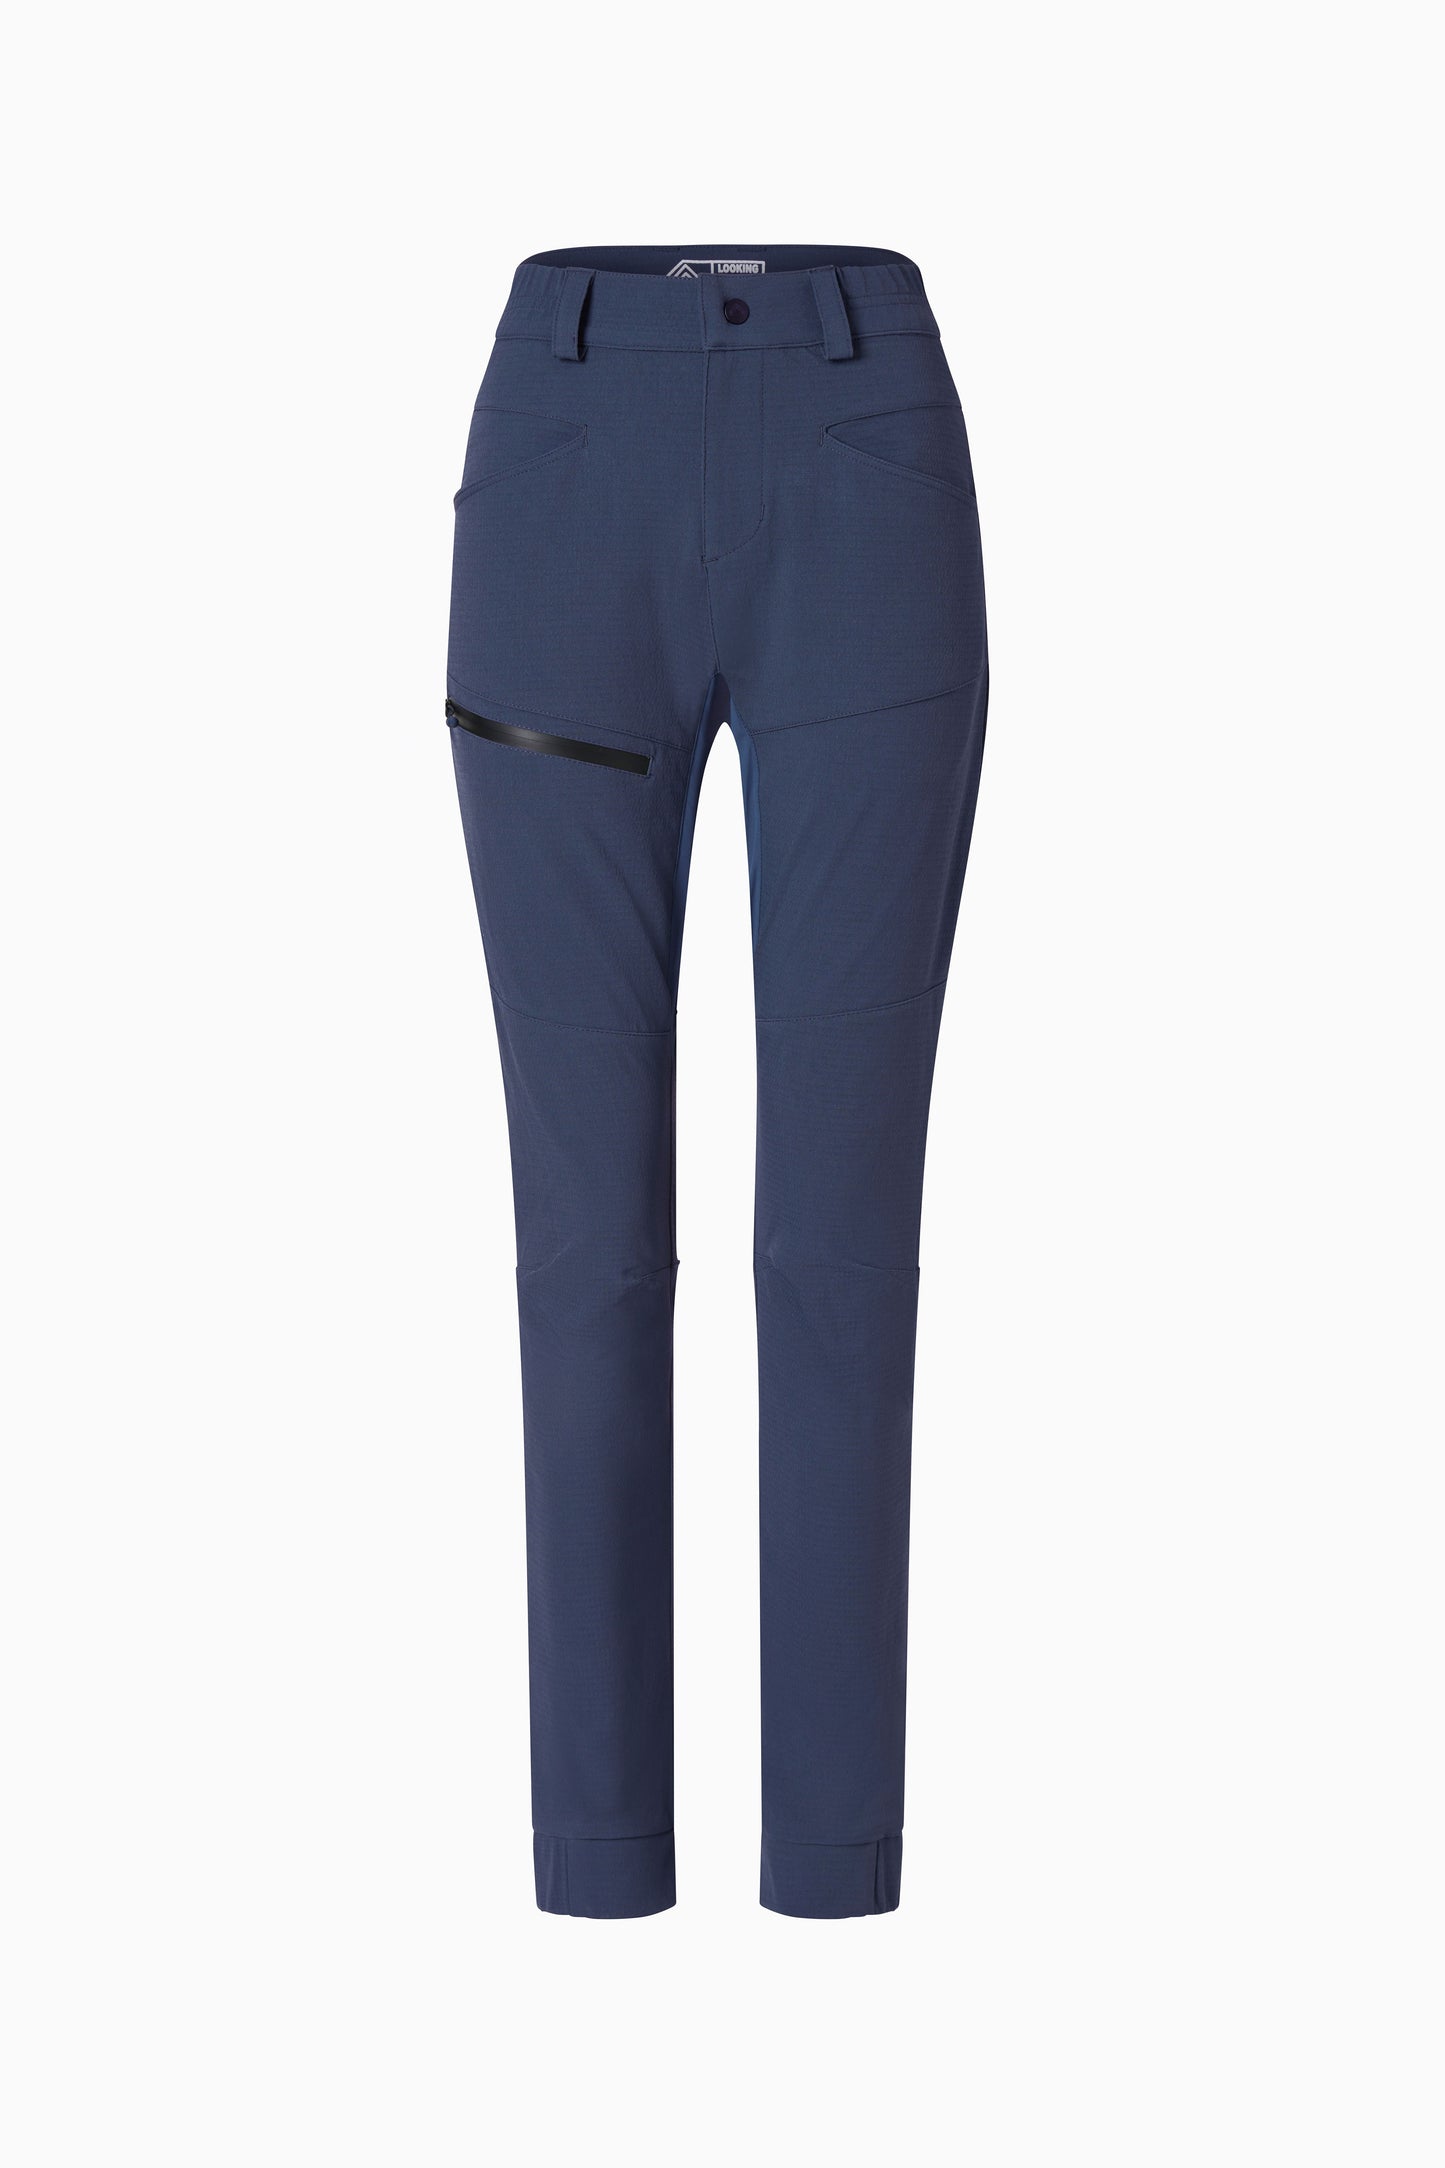 Pantalon F208 femme TWILIGHT BLUE en Nylon Ripstop